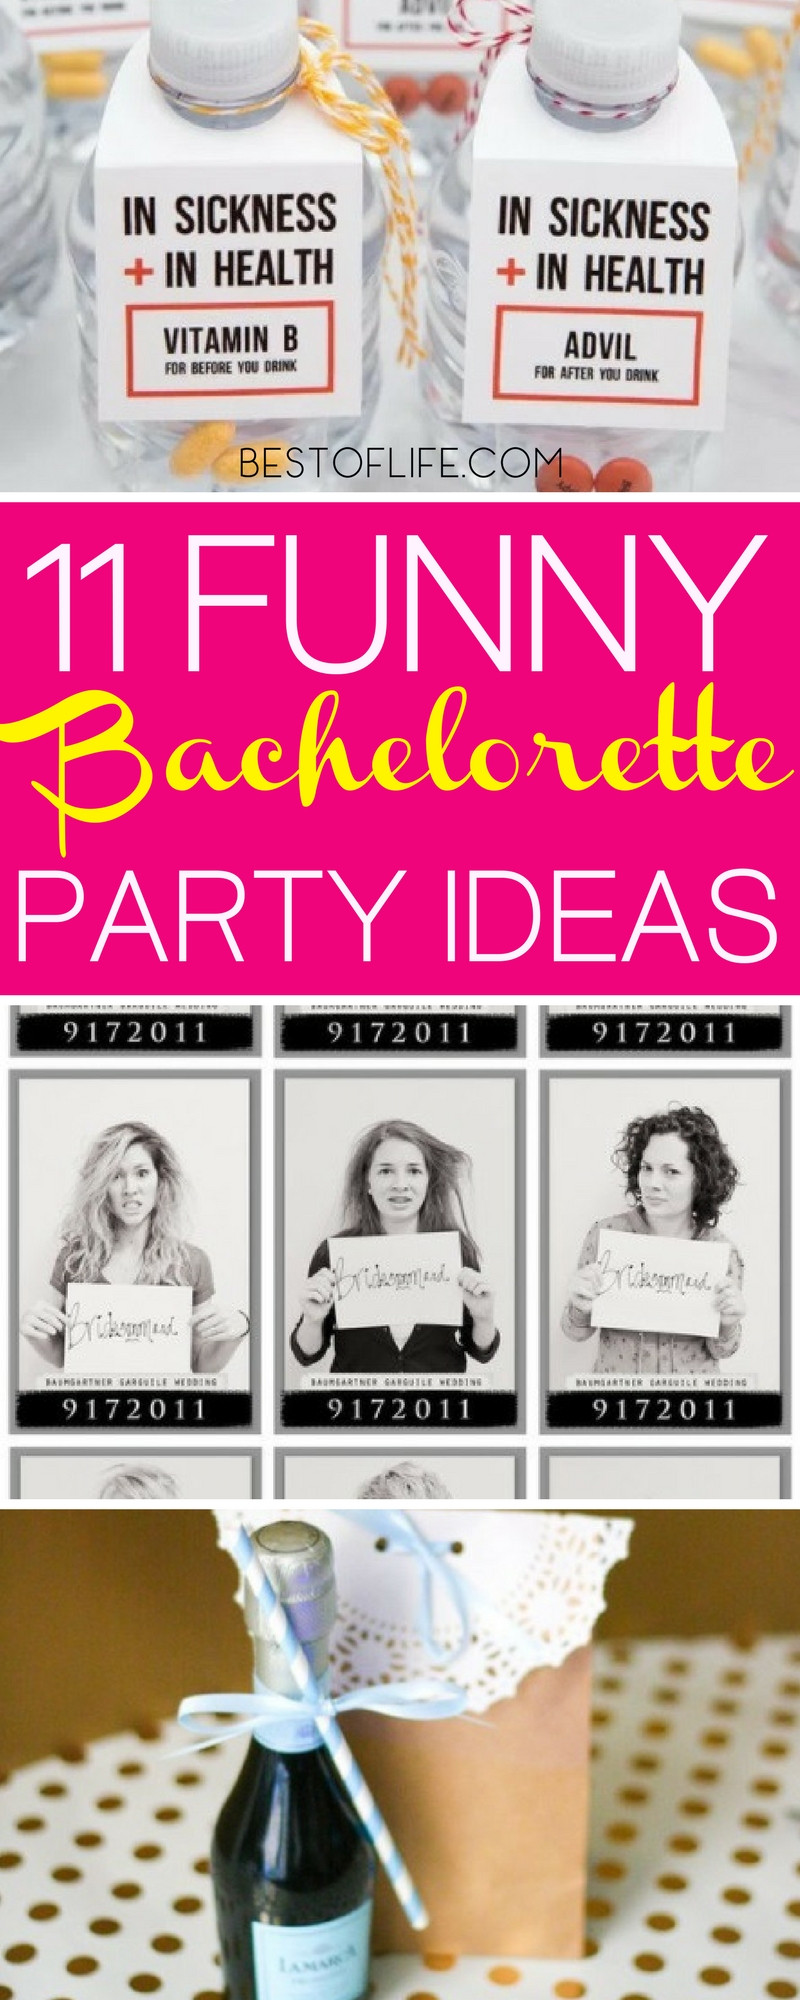 Clean Fun Bachelorette Party Ideas
 11 Funny Bachelorette Party Ideas and Games The Best of Life